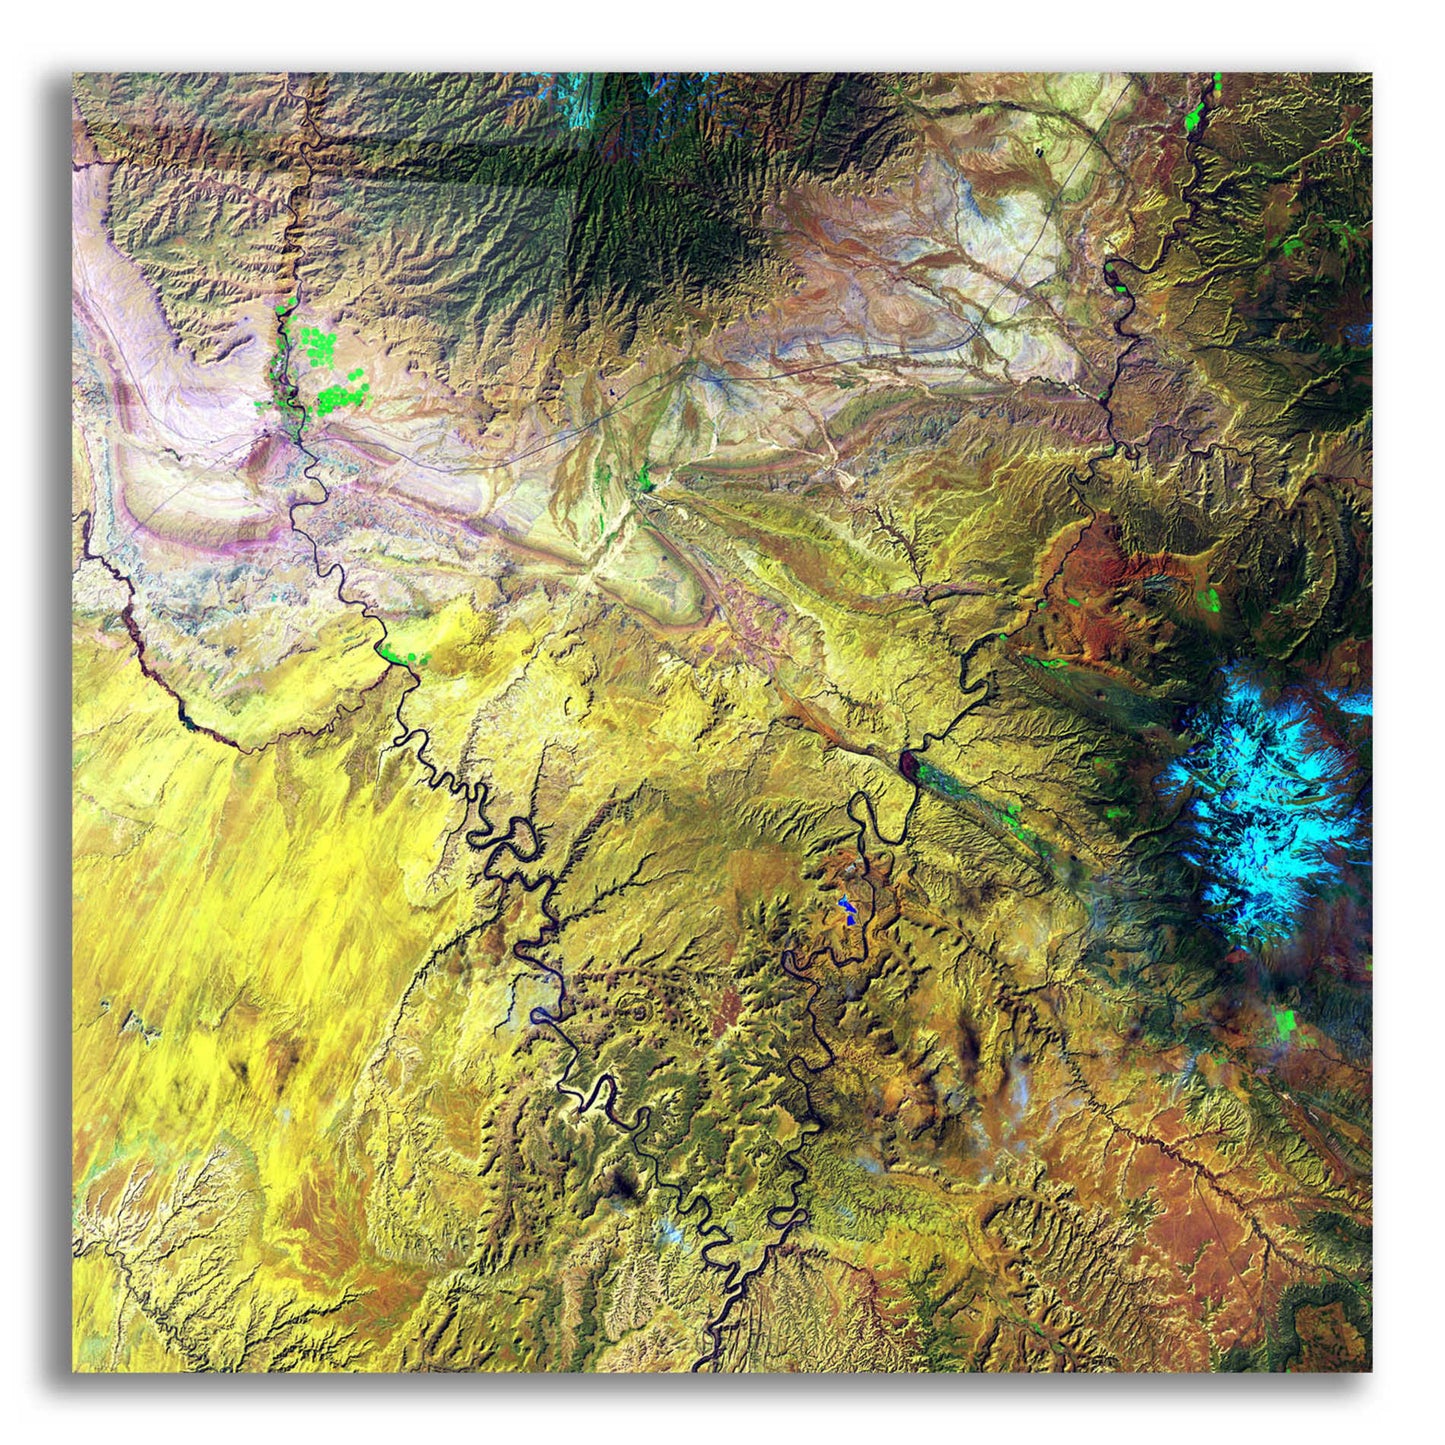 Epic Art 'Earth as Art: Canyonlands,' Acrylic Glass Wall Art,12x12x1.1x0,18x18x1.1x0,26x26x1.74x0,37x37x1.74x0